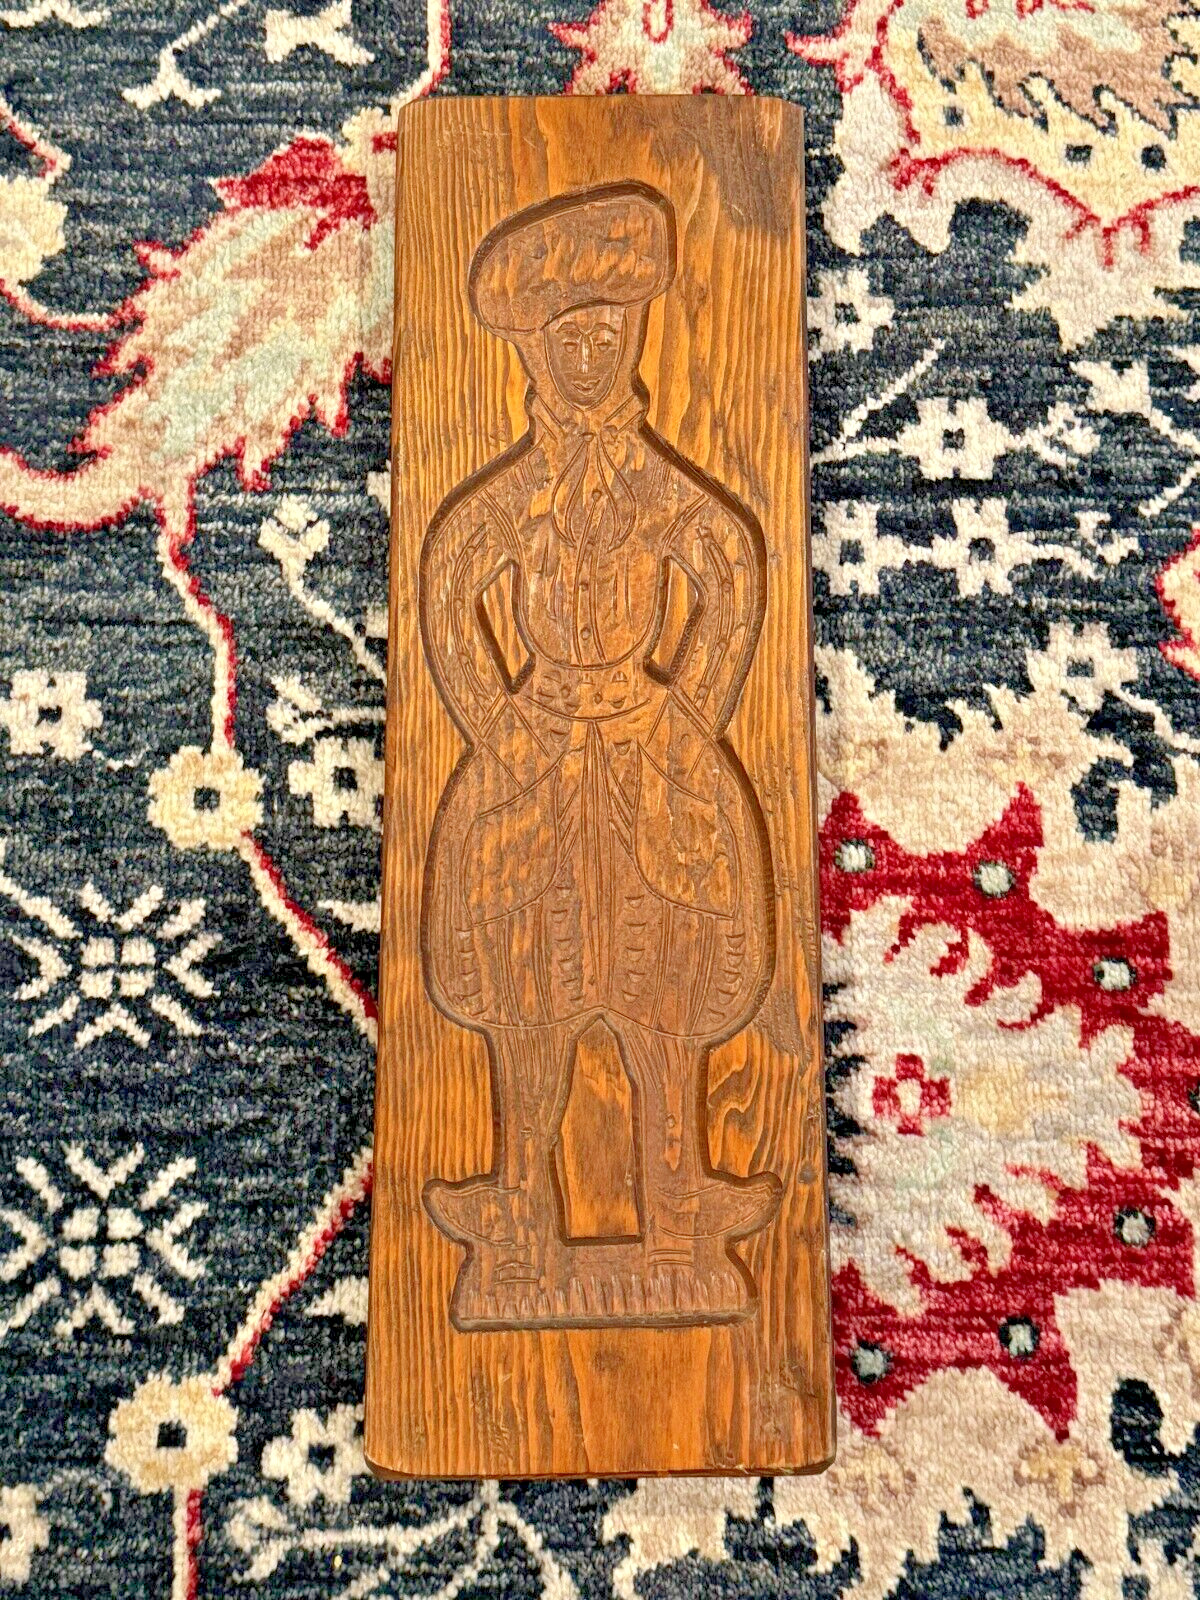 Antique 1800s Wooden Hand Carved Springerle Cookie Board Press Stamp of Baker